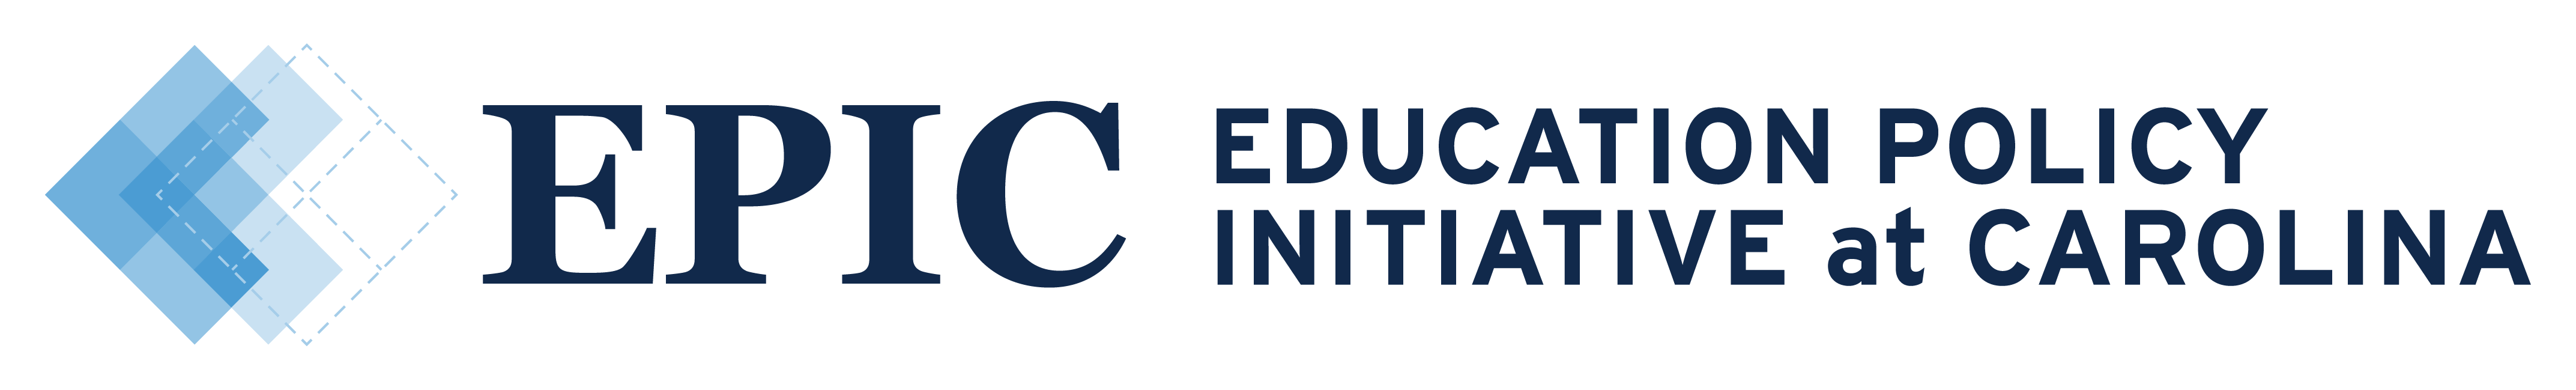 Education Policy Initiative at Carolina